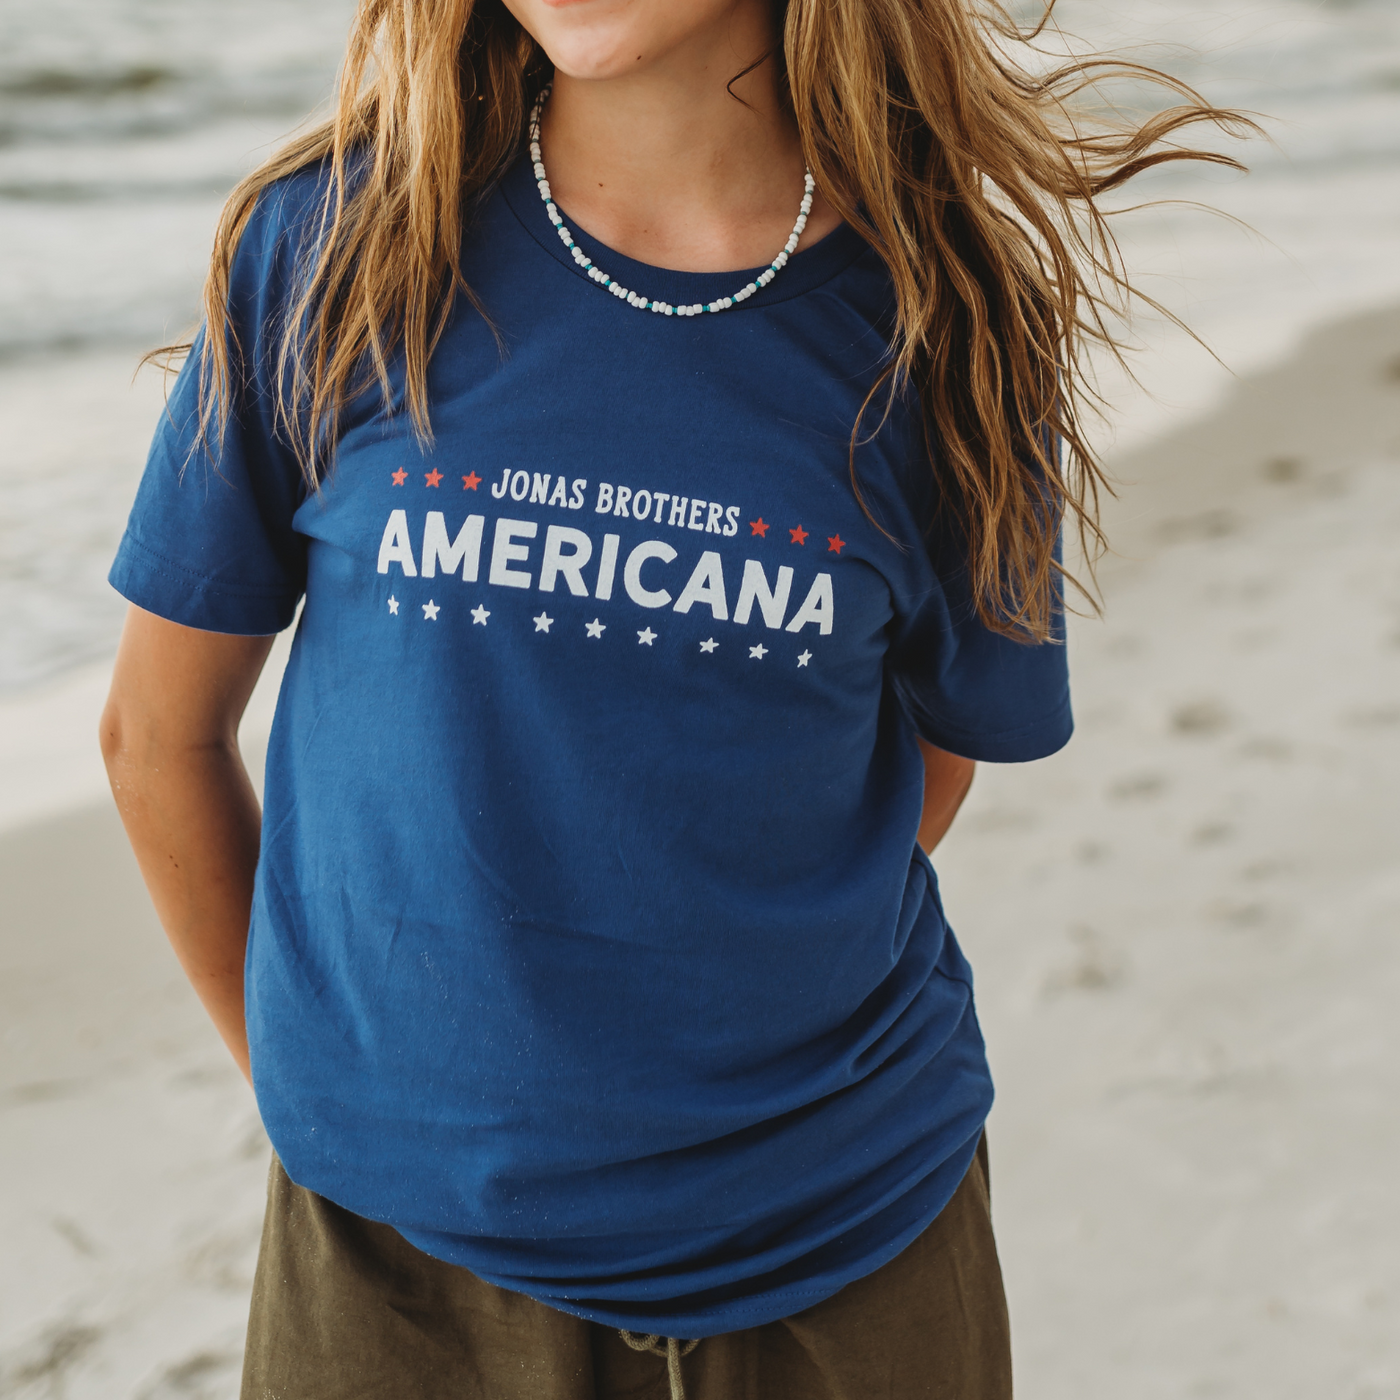 Camiseta Americana - Azul